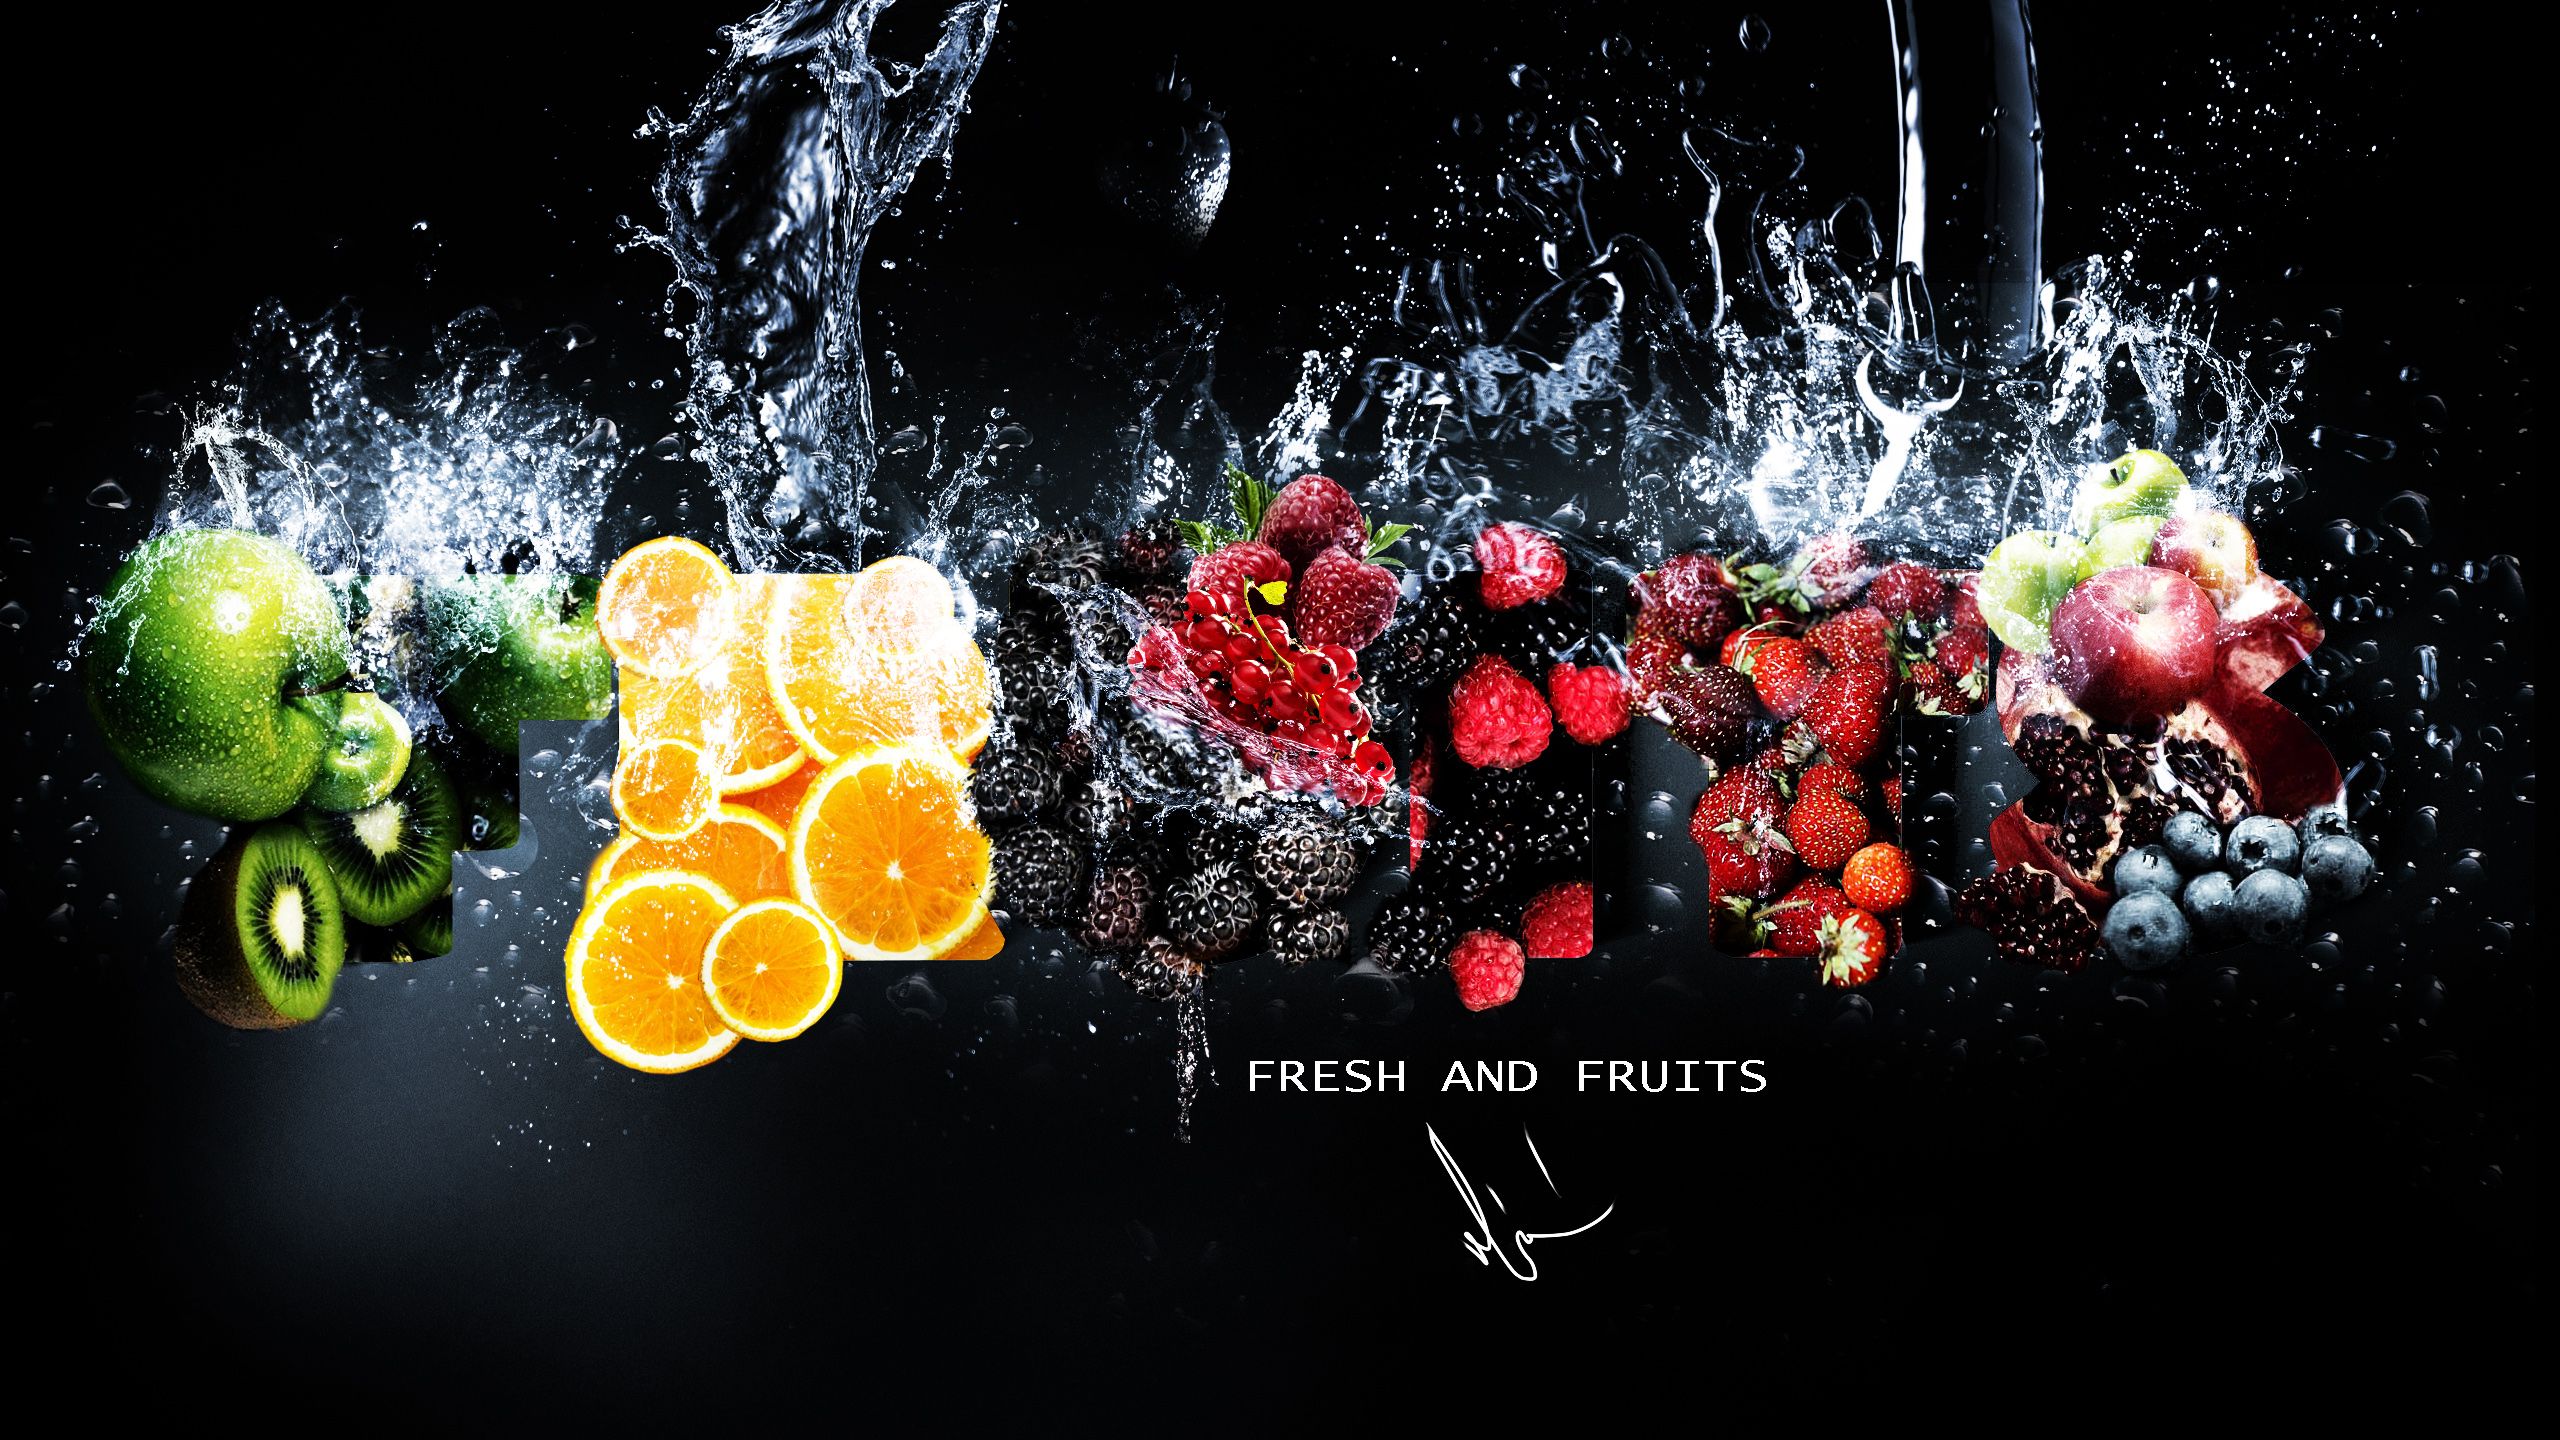 Fruits 4K wallpaper for your desktop or mobile screen free